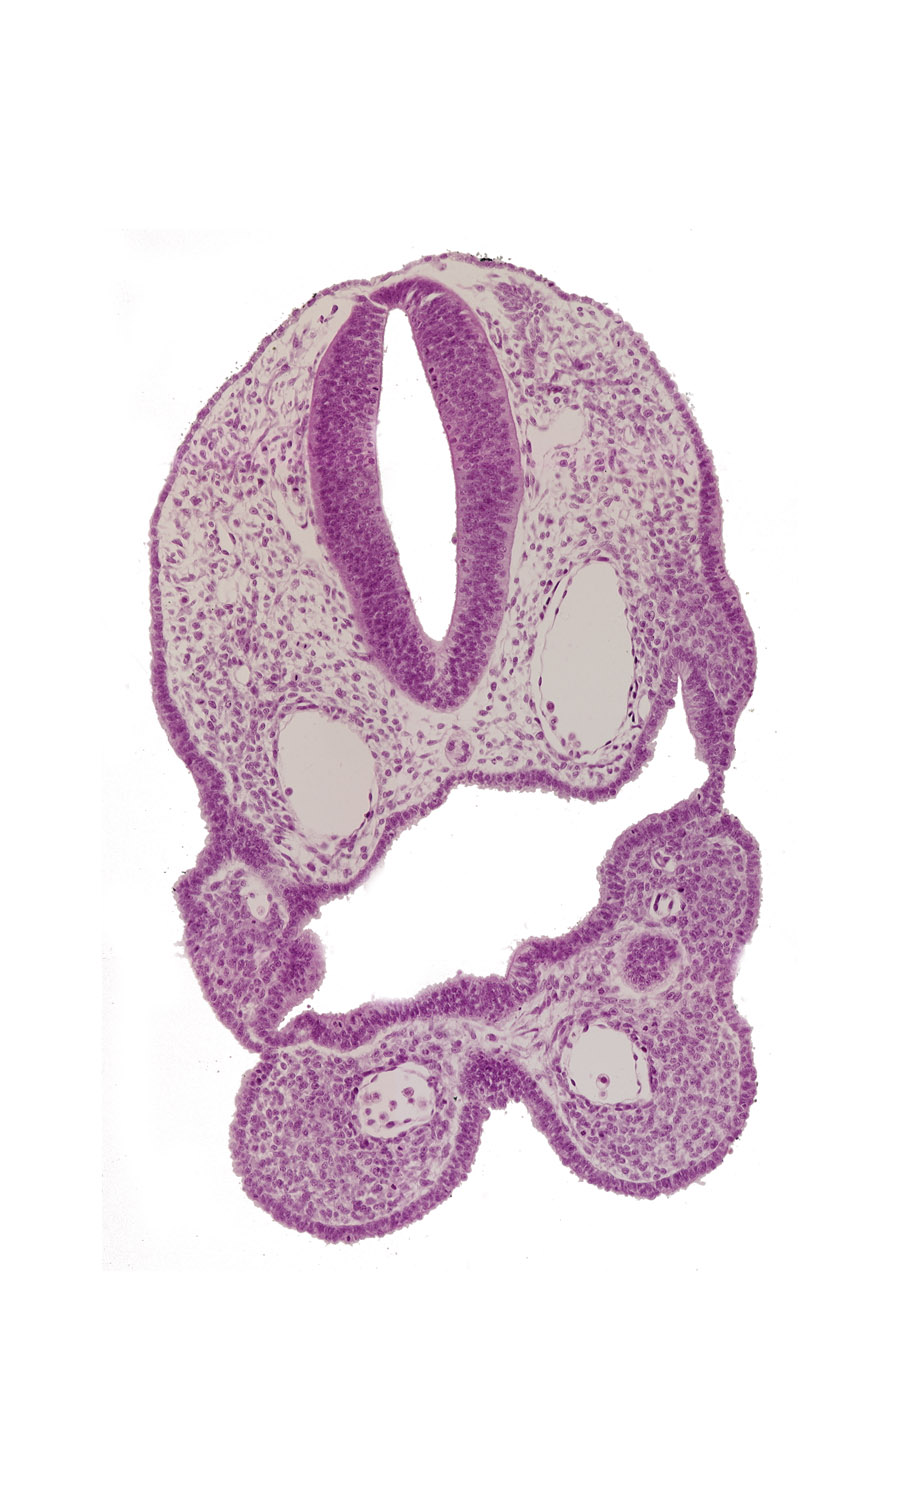 aortic arch 1, aortic arch 2, caudal edge of pharyngeal pouch 1, cephalic edge of dermatomyotome 1 (O-1), cephalic edge of thyroid diverticulum, head mesenchyme, junction of precardinal and primary head veins, median mandibular groove, notochord, pharyngeal arch 1 mesenchyme, pharyngeal membrane 2, pharyngeal pouch 2, pharynx, rhombencephalon (Rh. D)